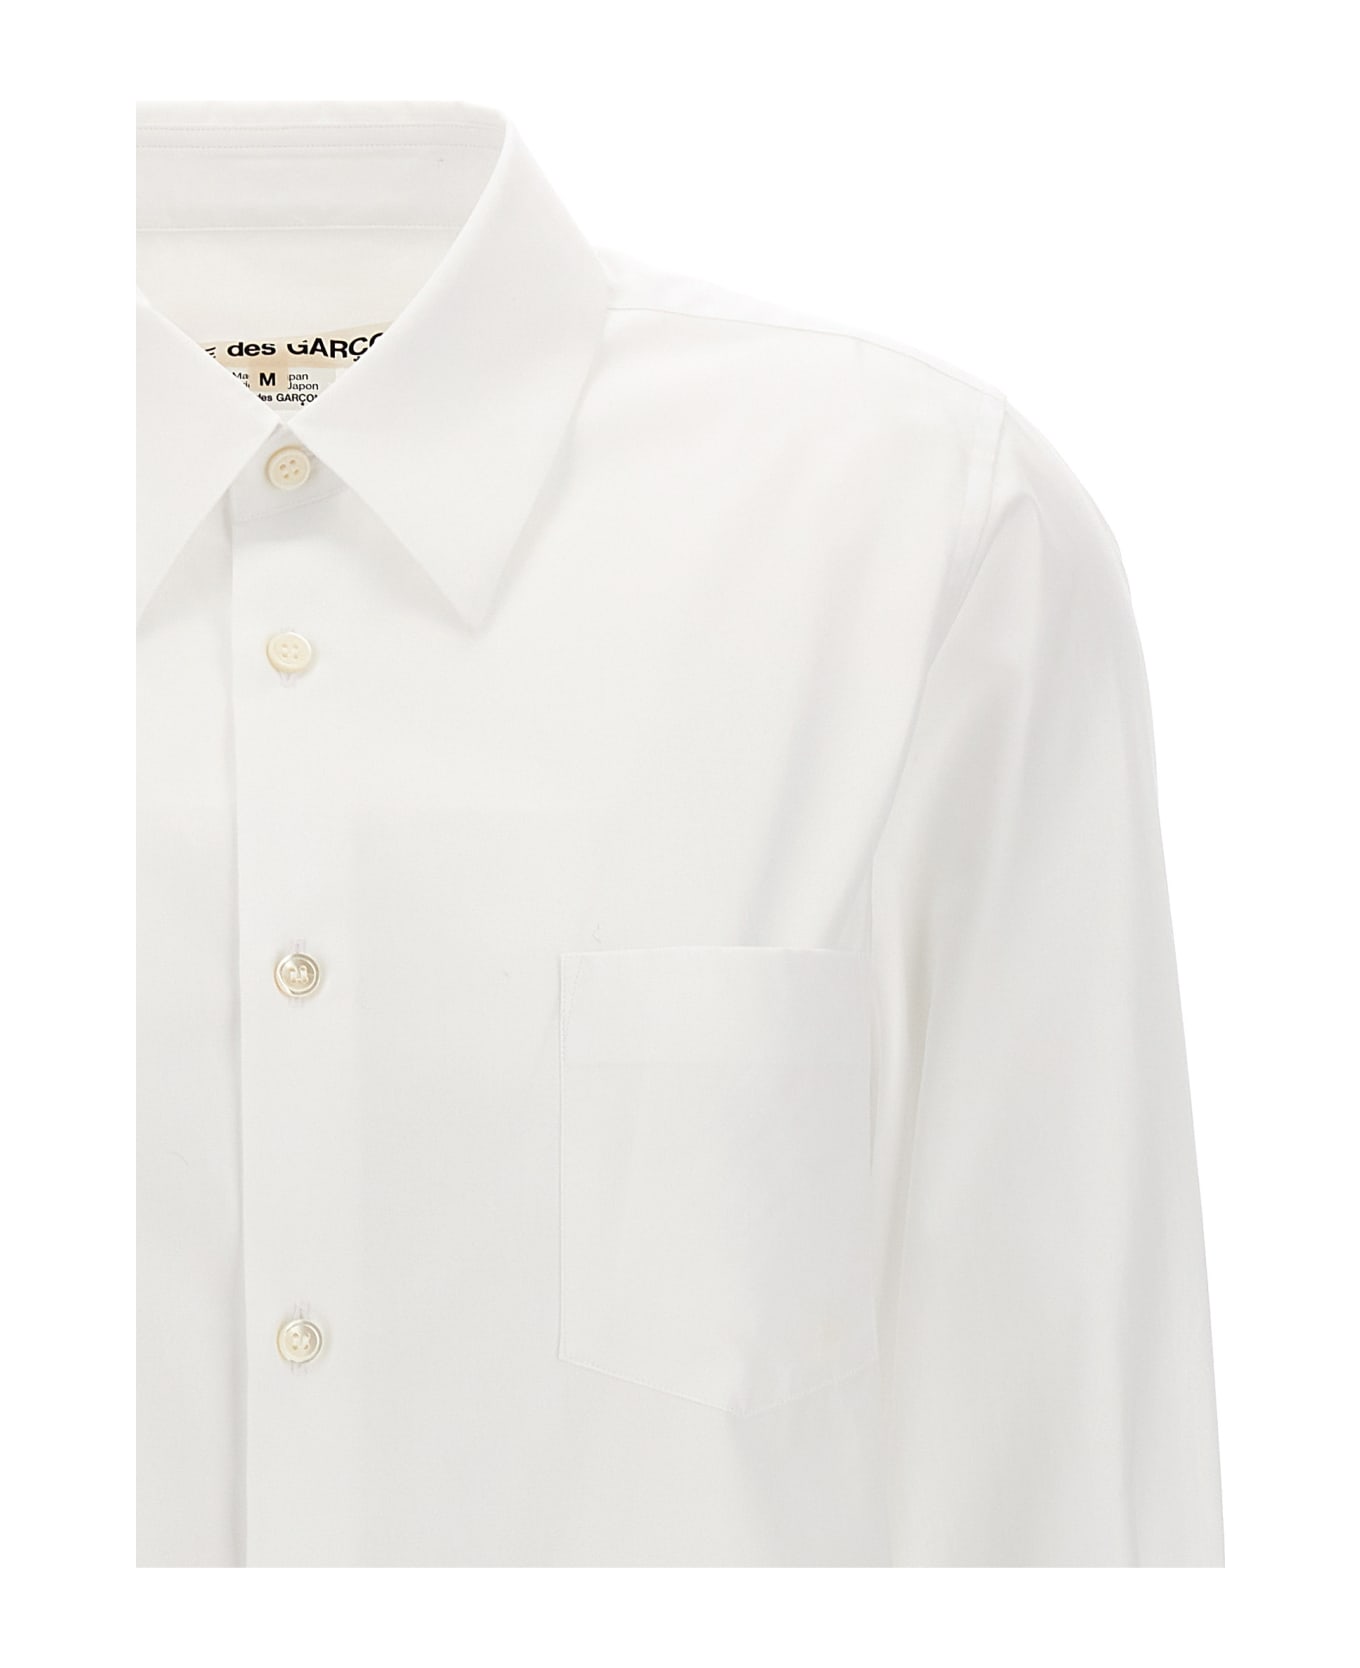 Comme des Garçons Asymmetrical Shirt - White シャツ